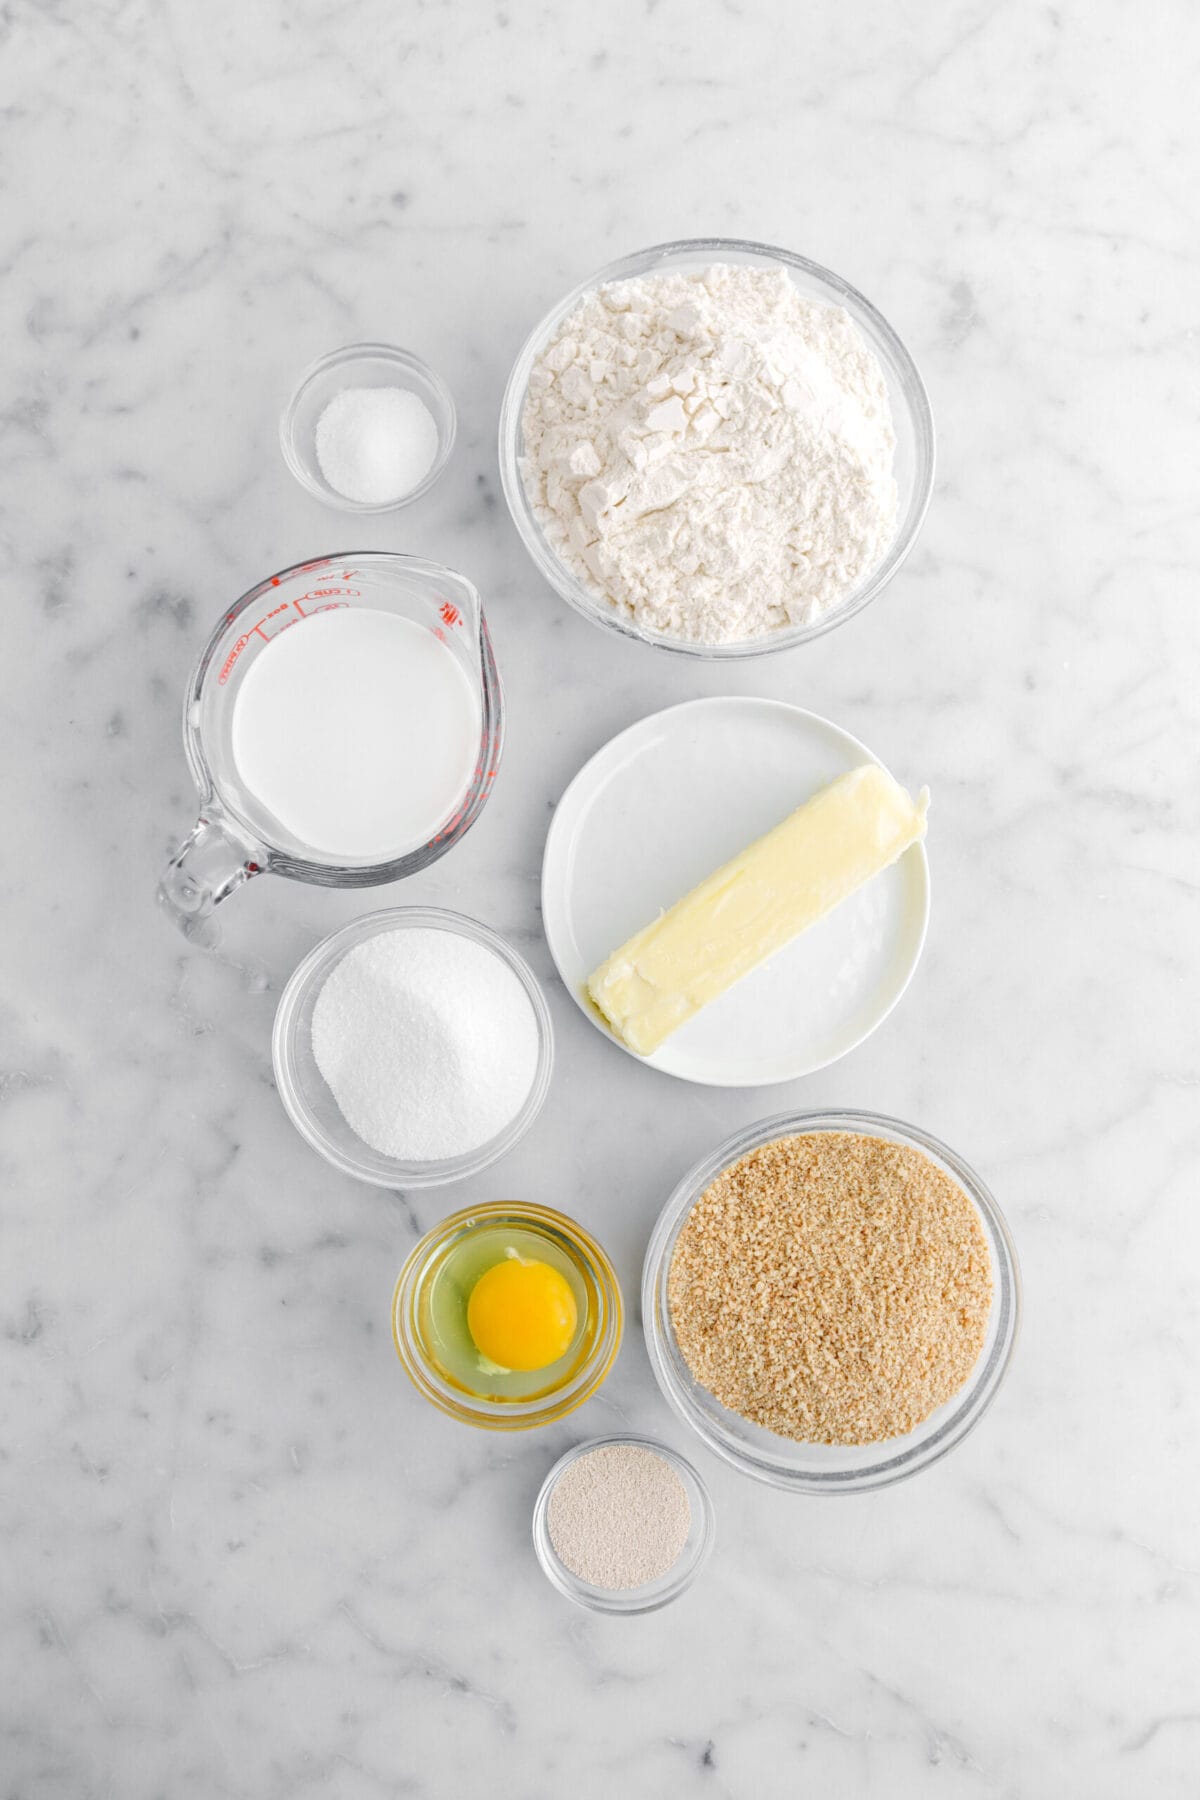 salt, flour, milk, butter, sugar, egg, graham cracker crumbs, and yeast on marble surface.